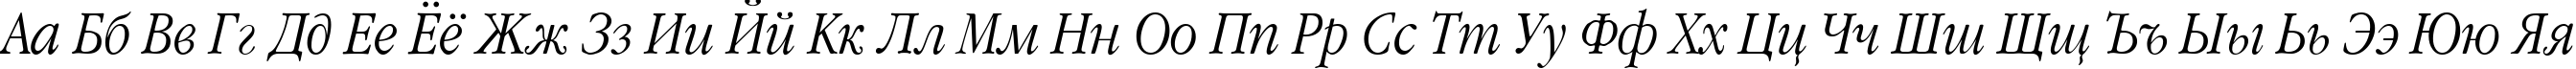 Пример написания русского алфавита шрифтом Garamond Narrow Italic:1 Oct 1991